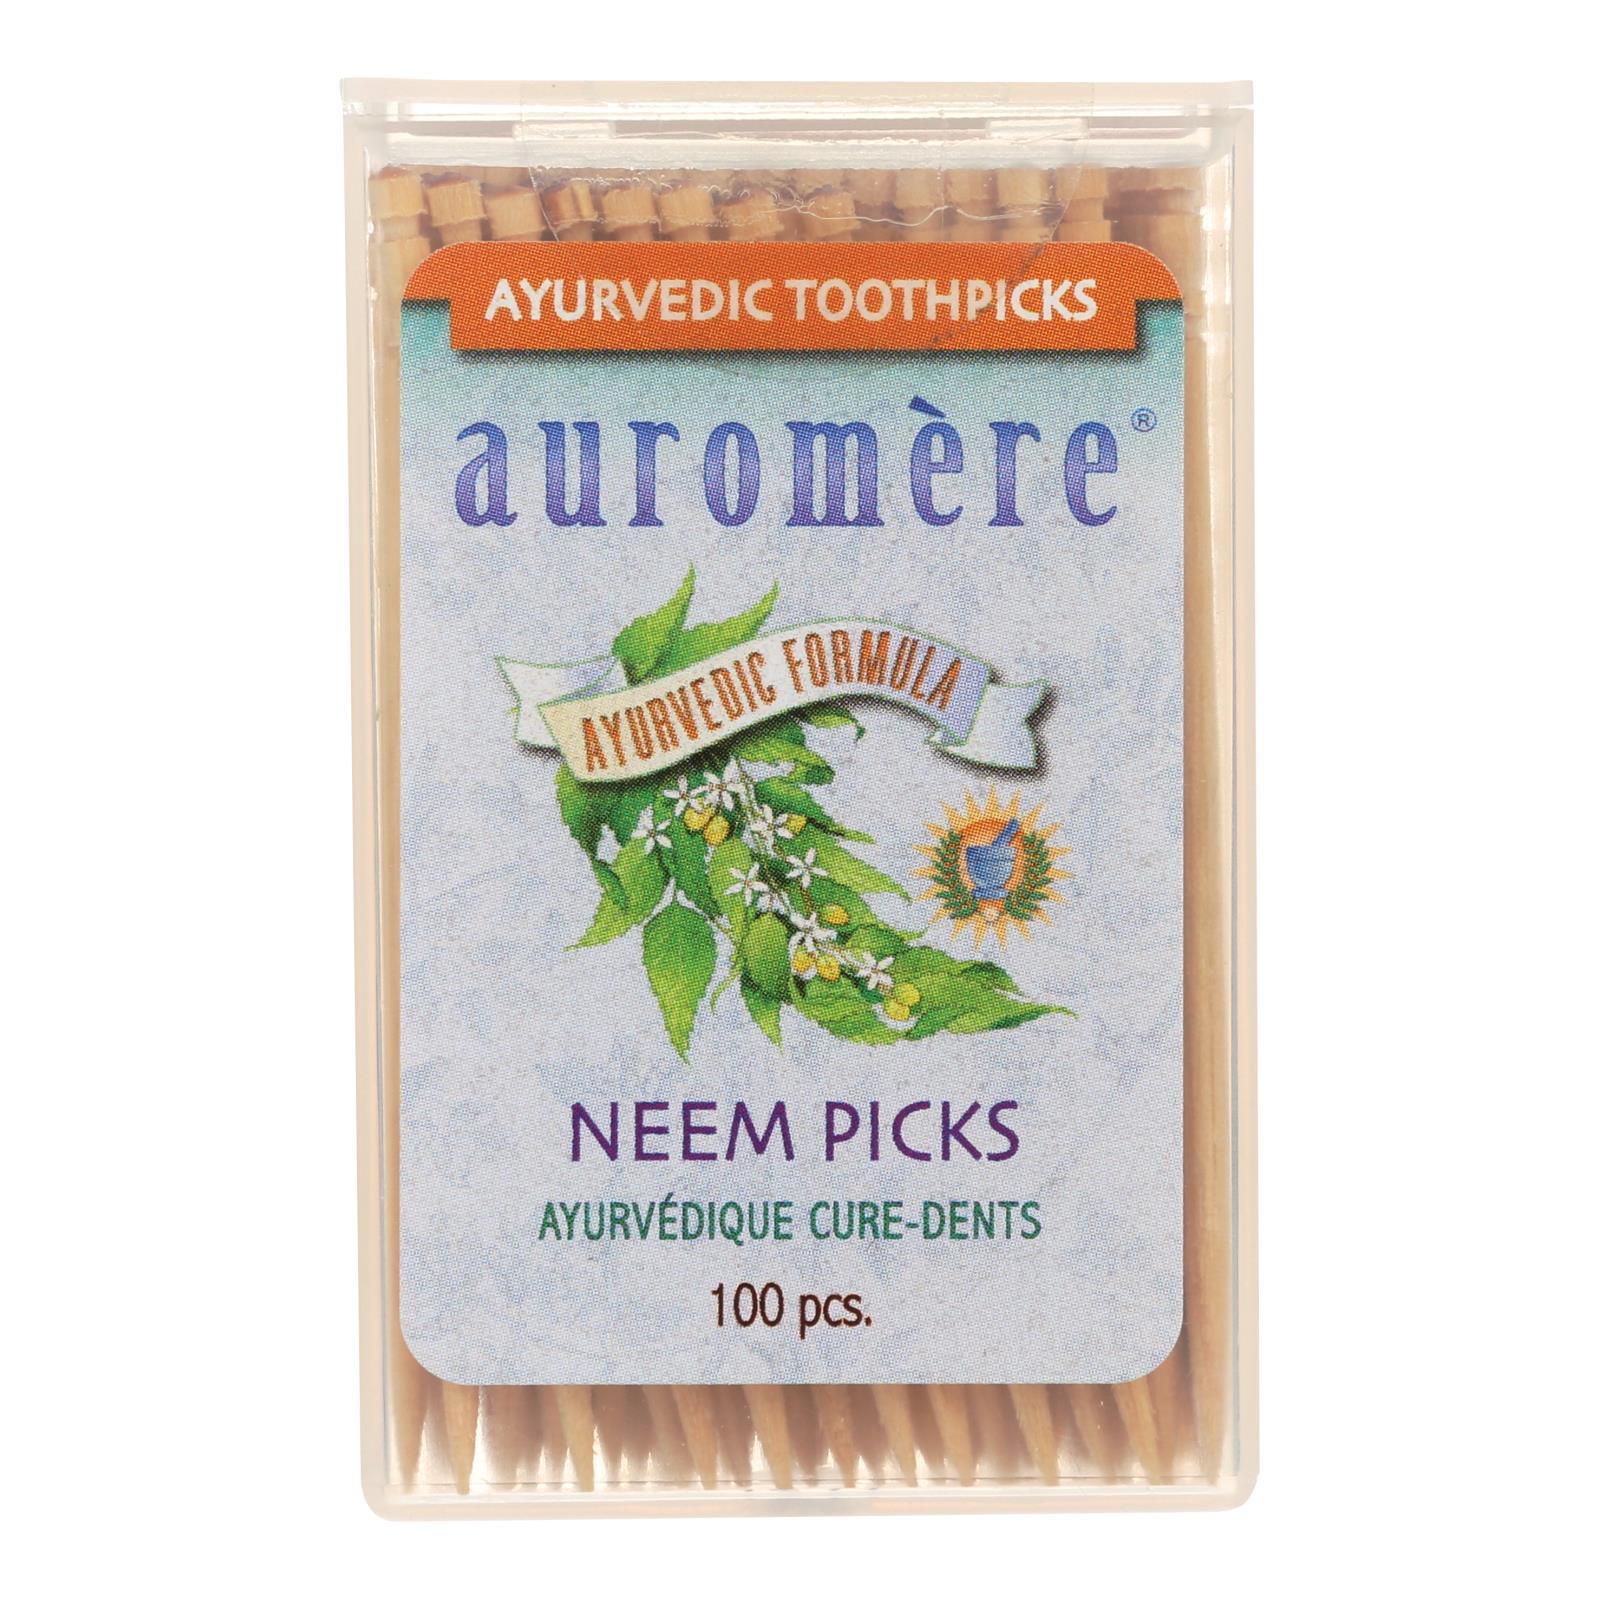 Auromere, Auromere Ayurvedic Neem Picks - 100 Toothpicks - Case of 12 (Pack of 12)